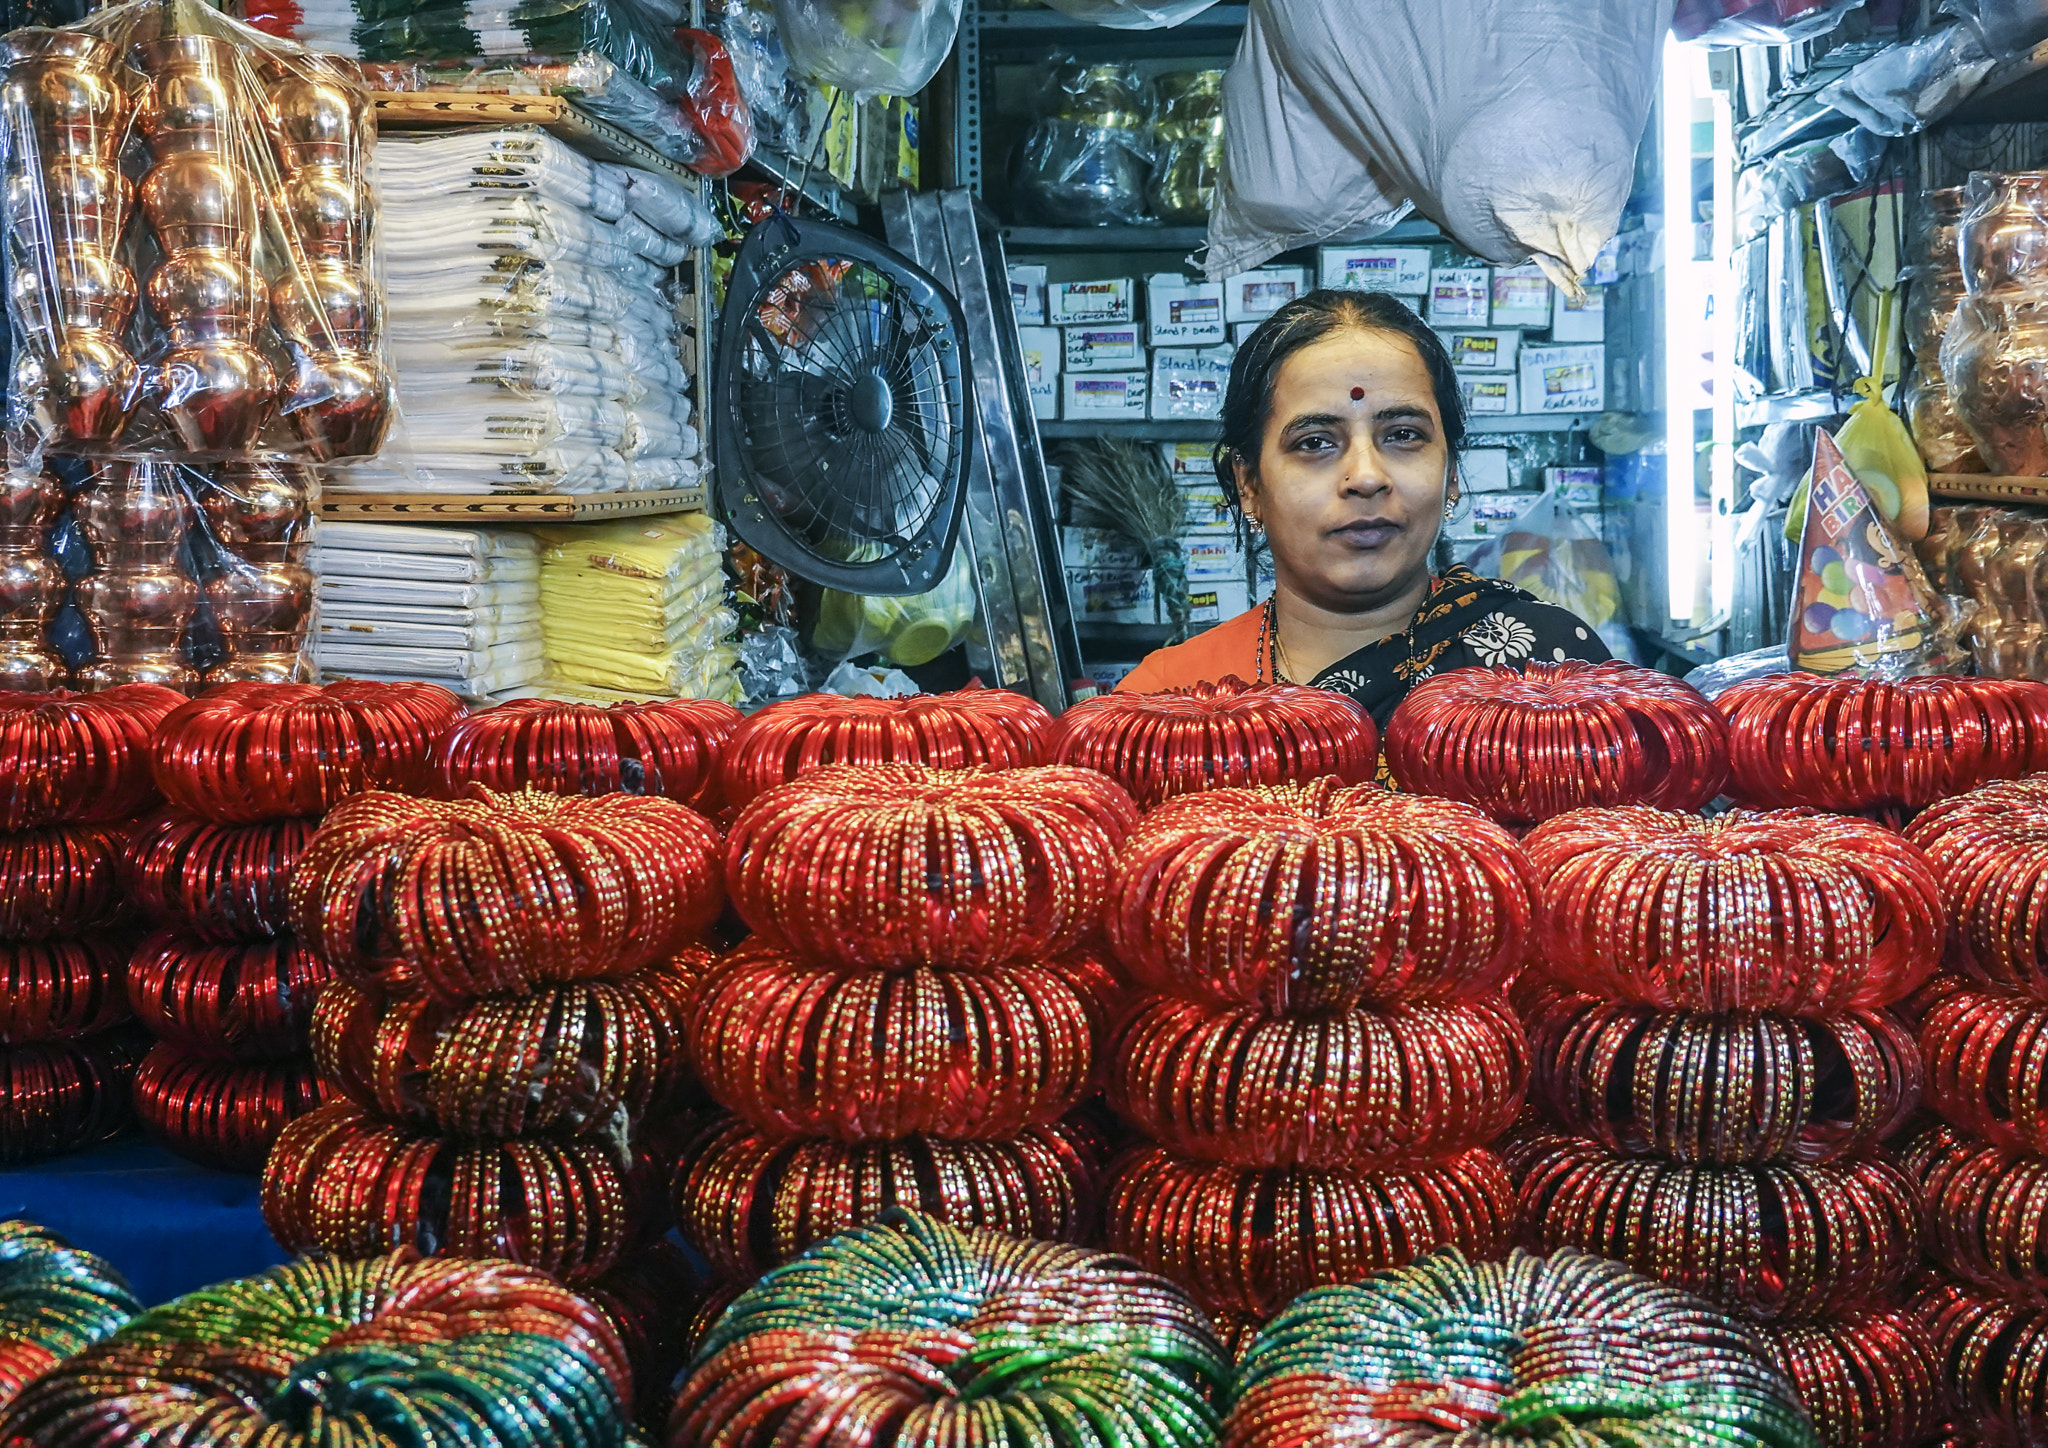 Wholesaler in KR Market, Bangalore